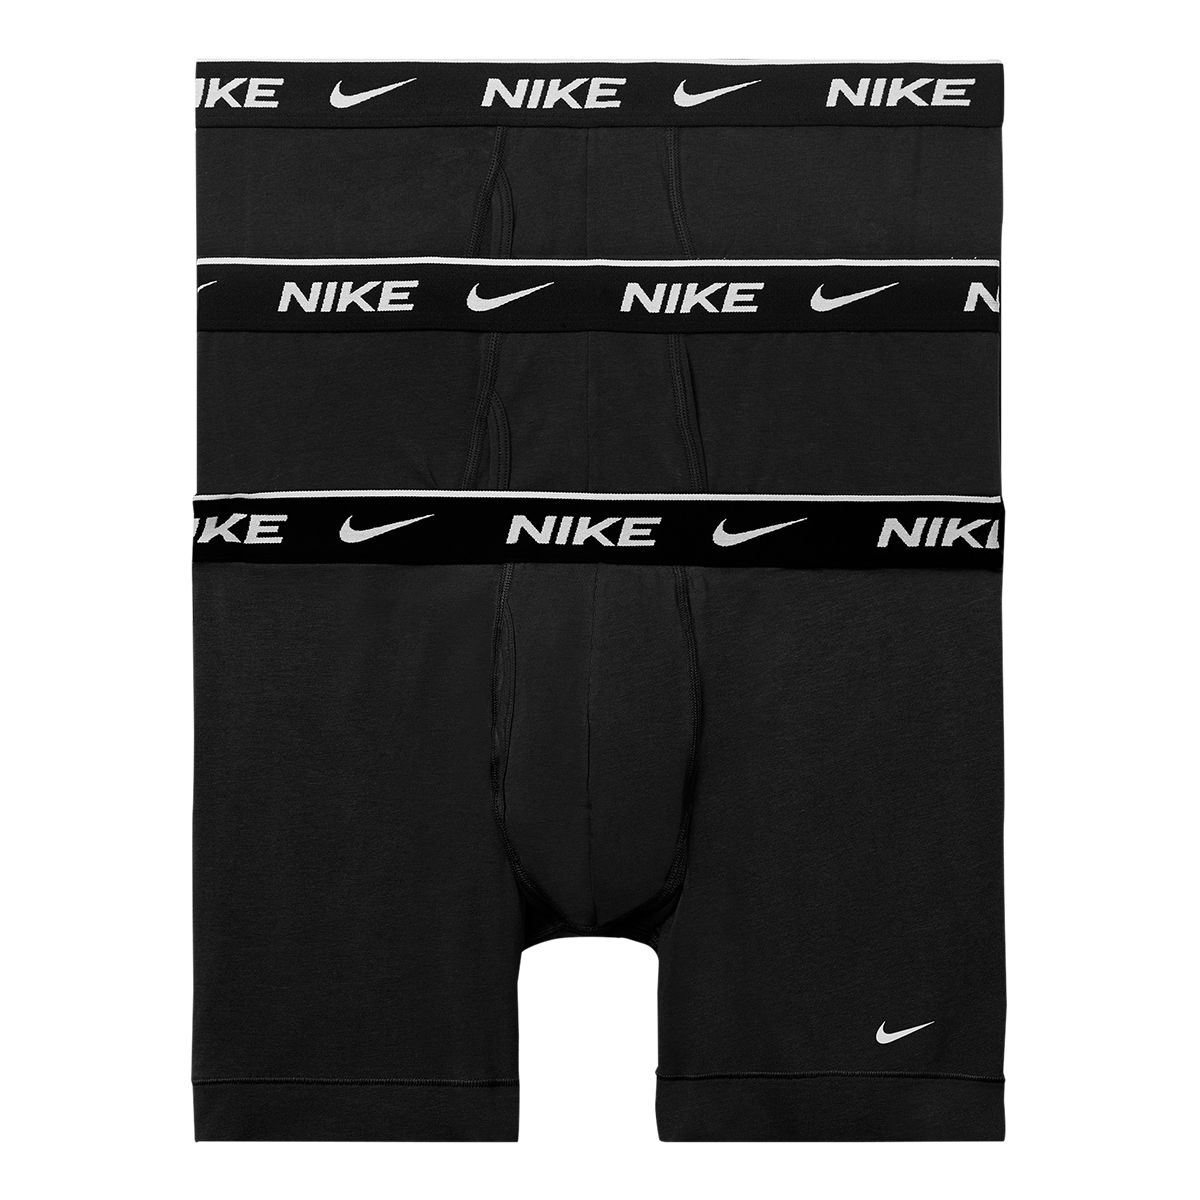 Men's underwear Nike Boxer Brief 3 Pack Black